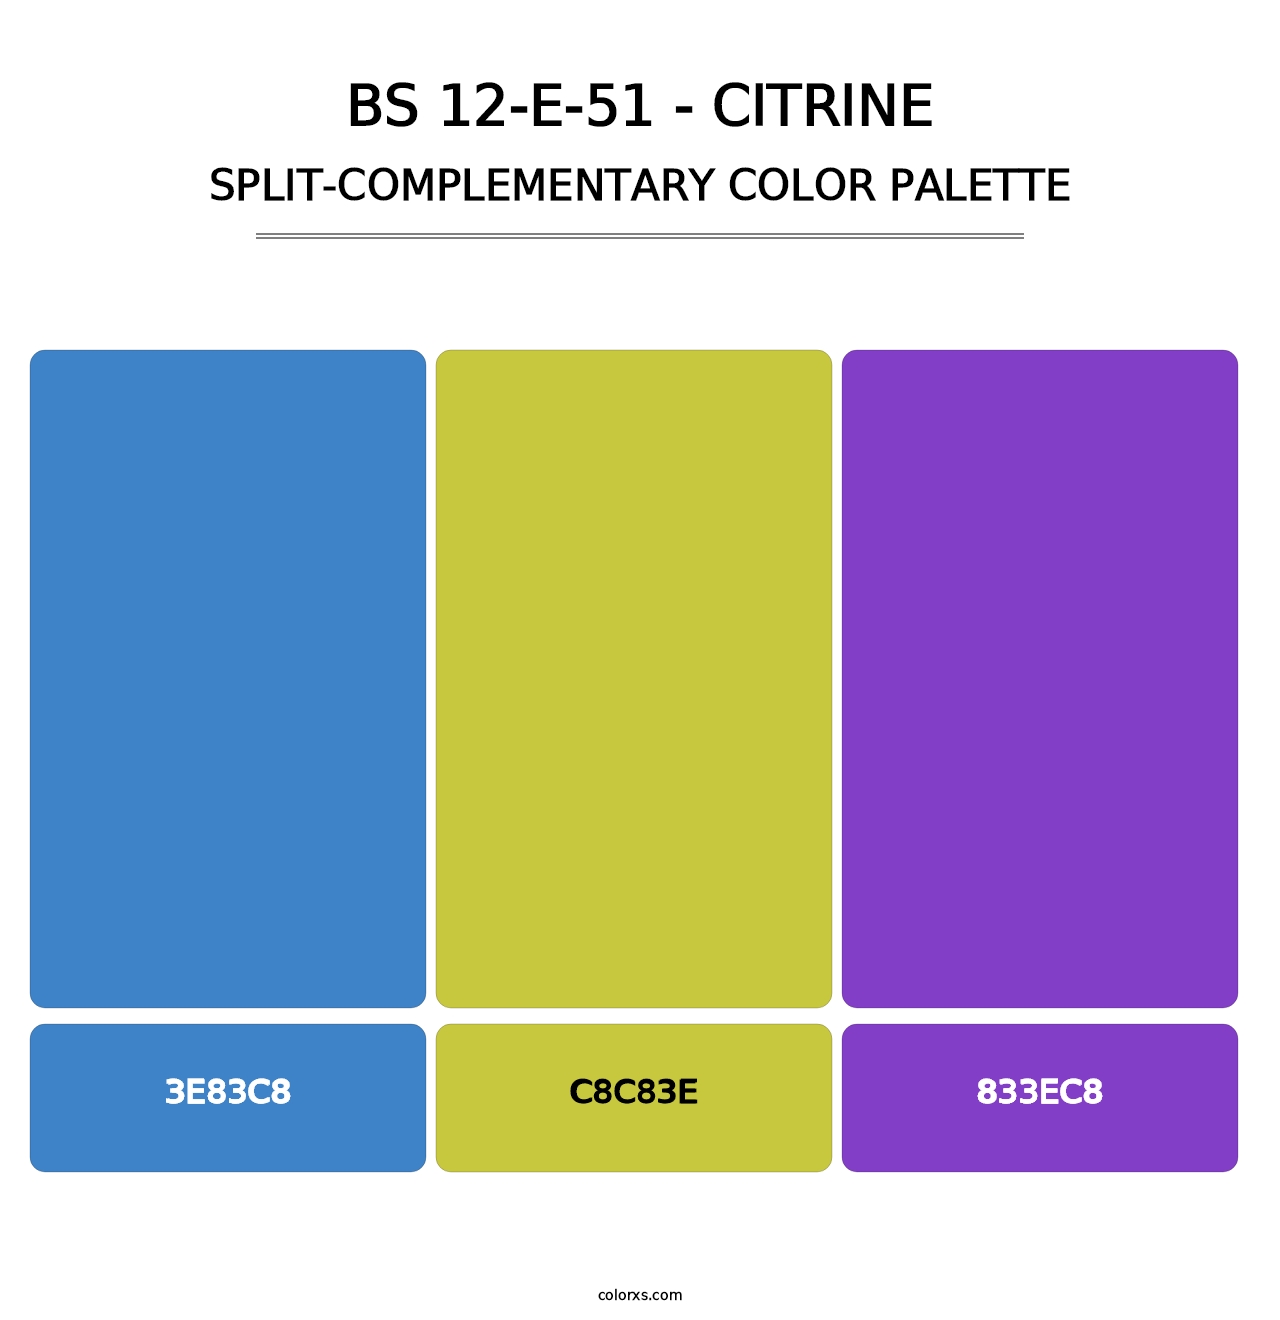 BS 12-E-51 - Citrine - Split-Complementary Color Palette